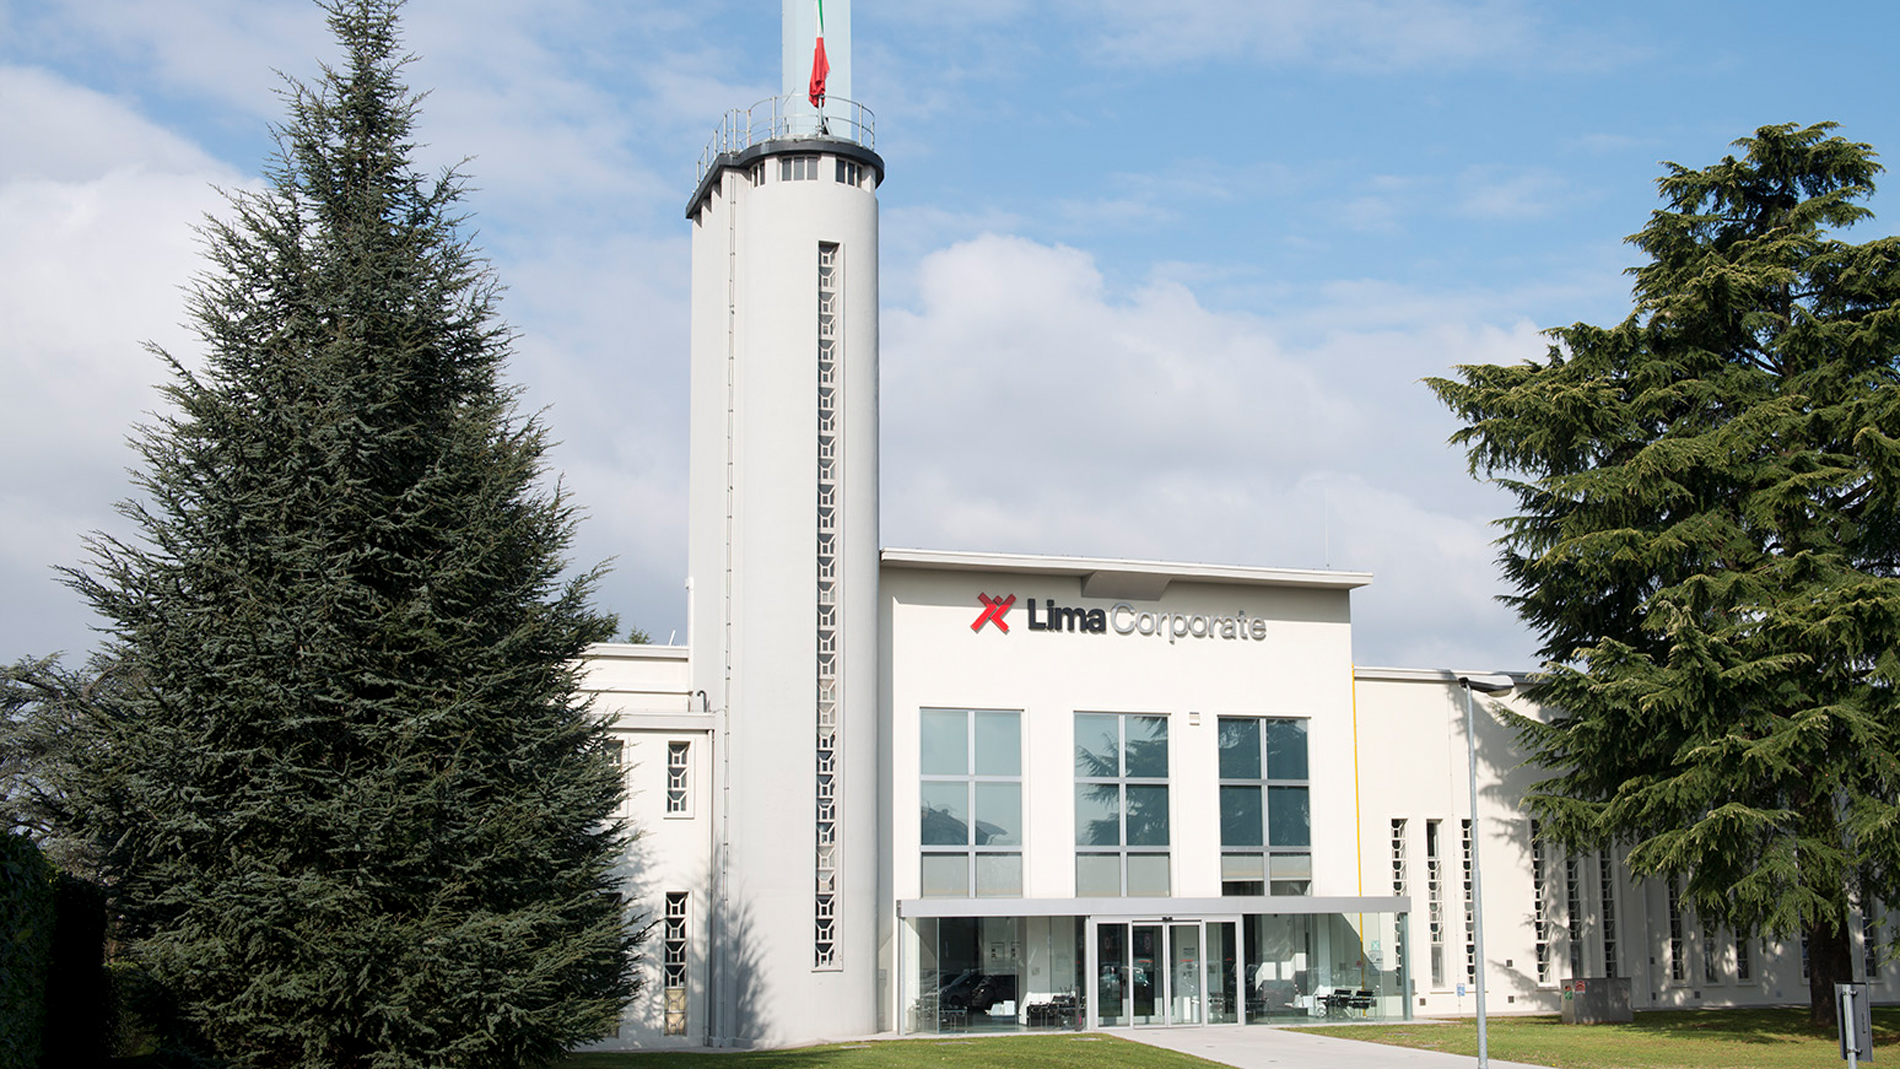 Firmenzentrale von LimaCorporate in San Daniele del Friuli. Bild: Limacorporate